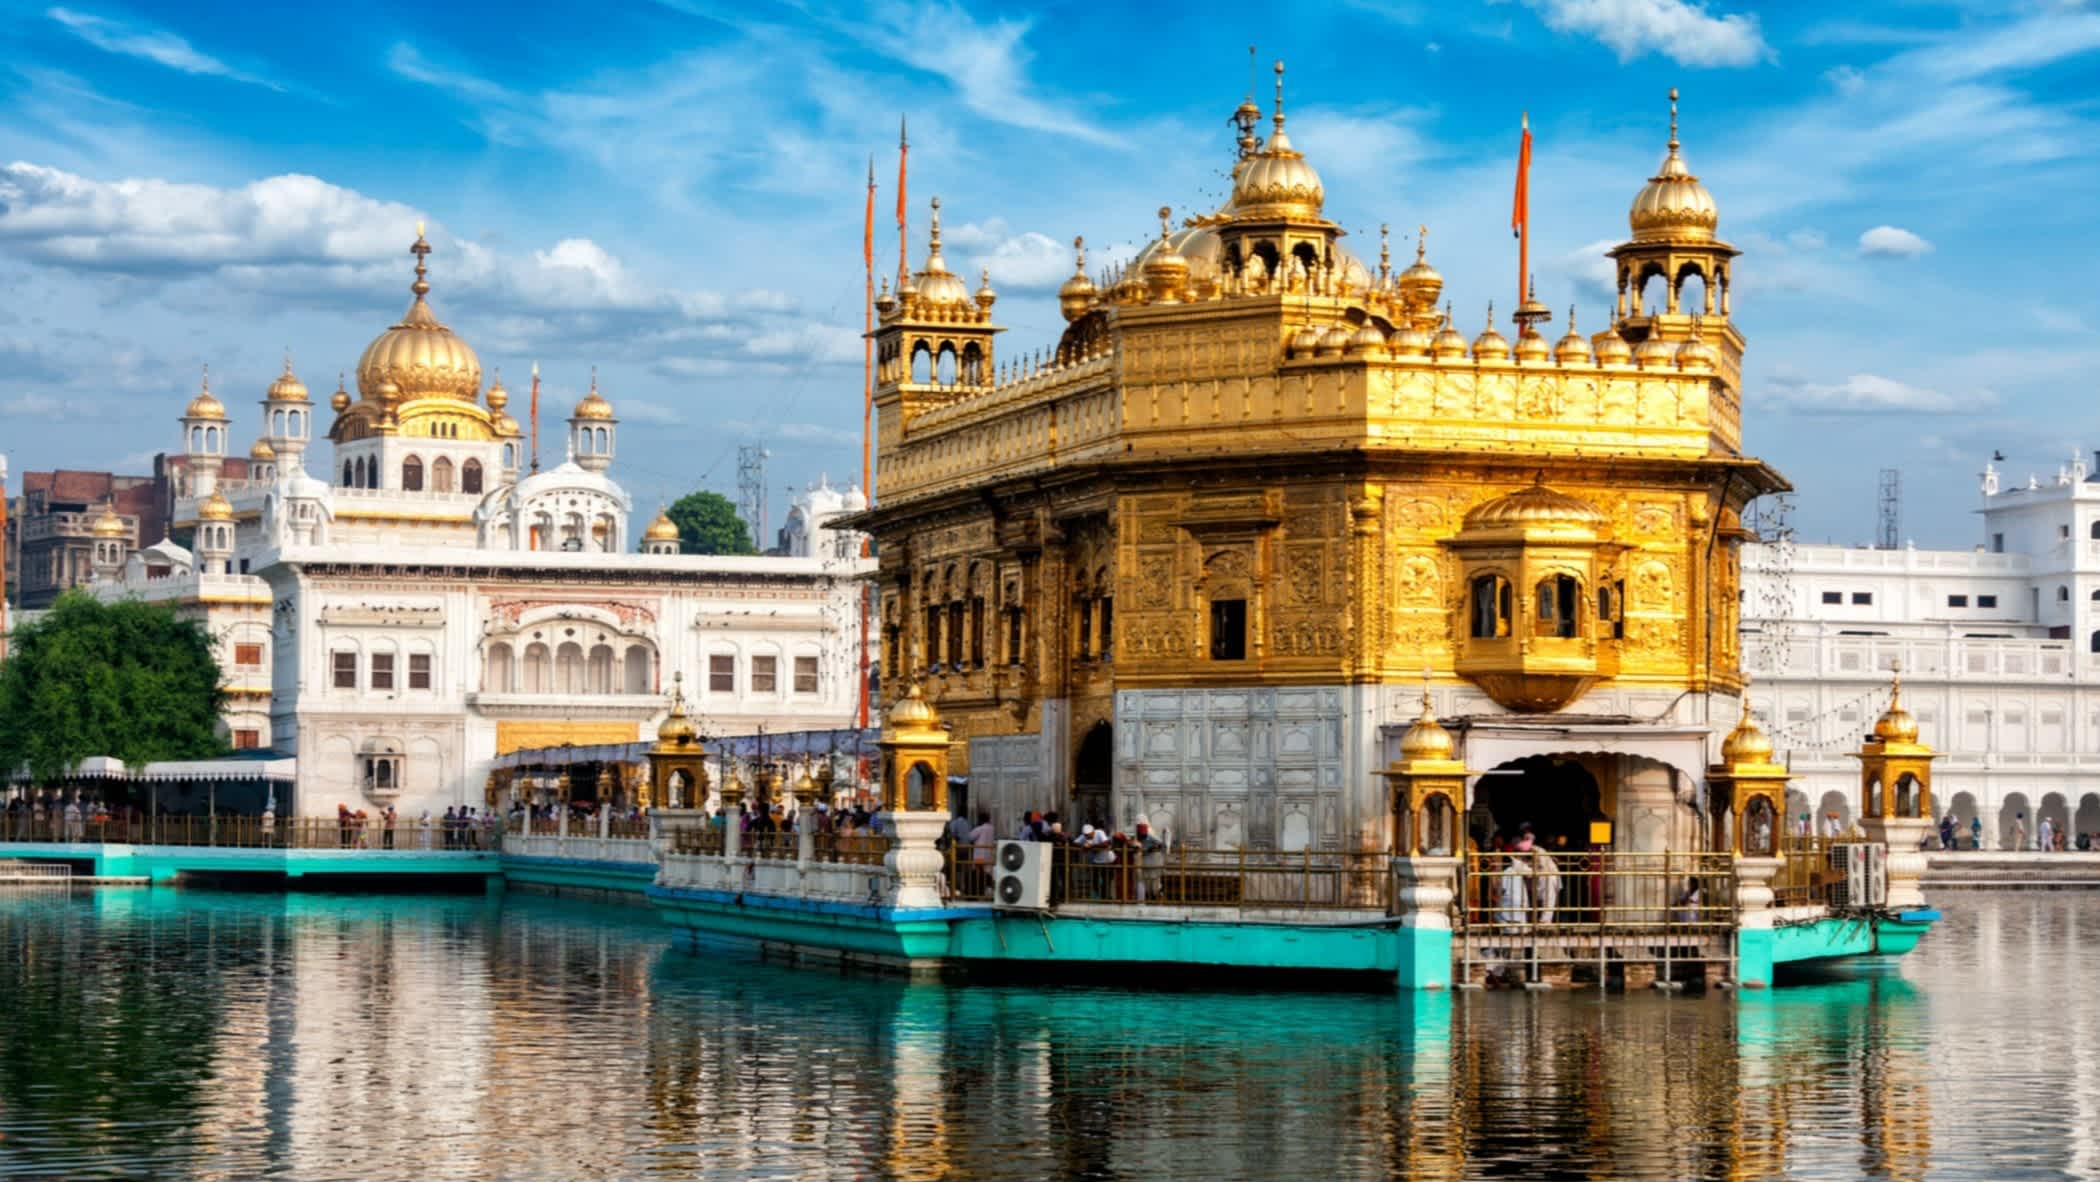 Vue du Temple d'Or (Harmandir Sahib) à Amritsar, Punjab, Inde

